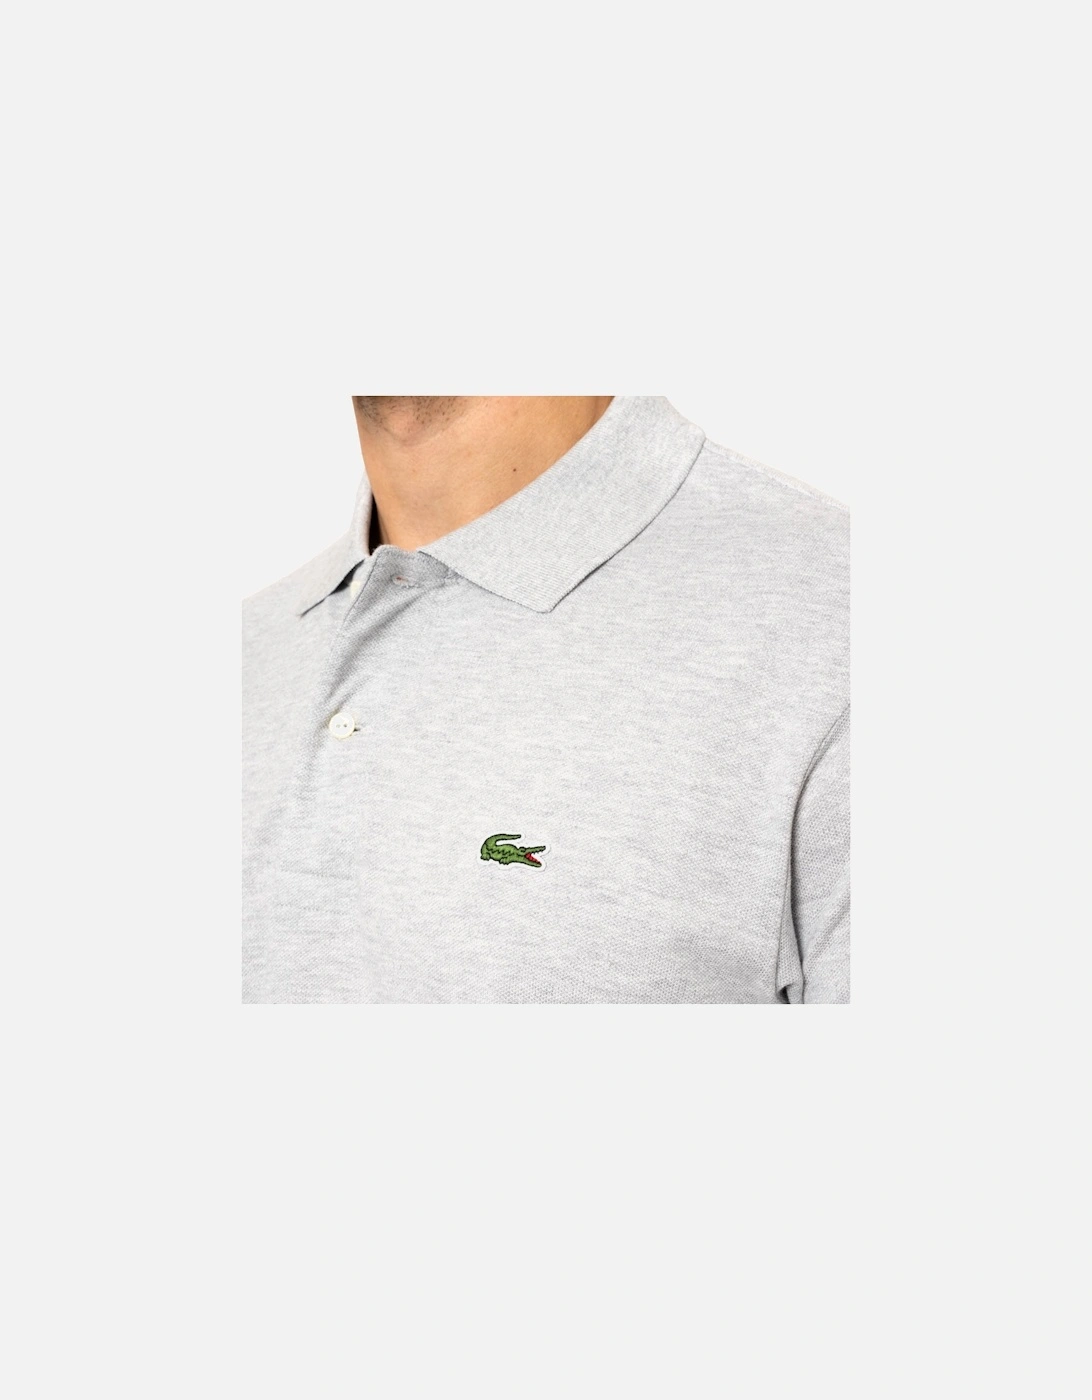 Mens L1264 Polo Shirt (Grey)